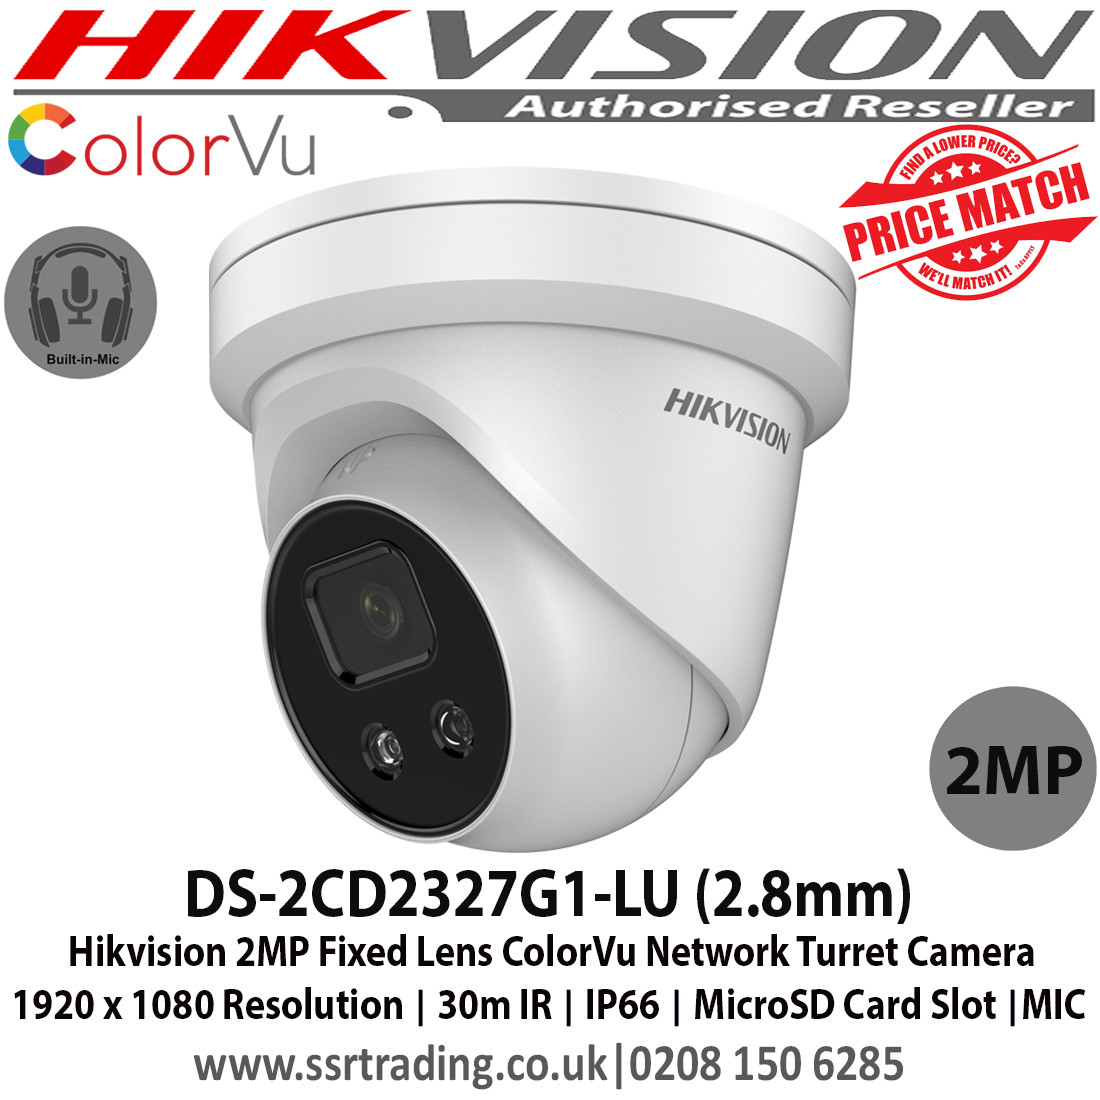 Hikvision Hikvision DS-2CD2327G1-LU 2MP ColorVu Fixed Turret Network Camera CCTV 2.8mm 